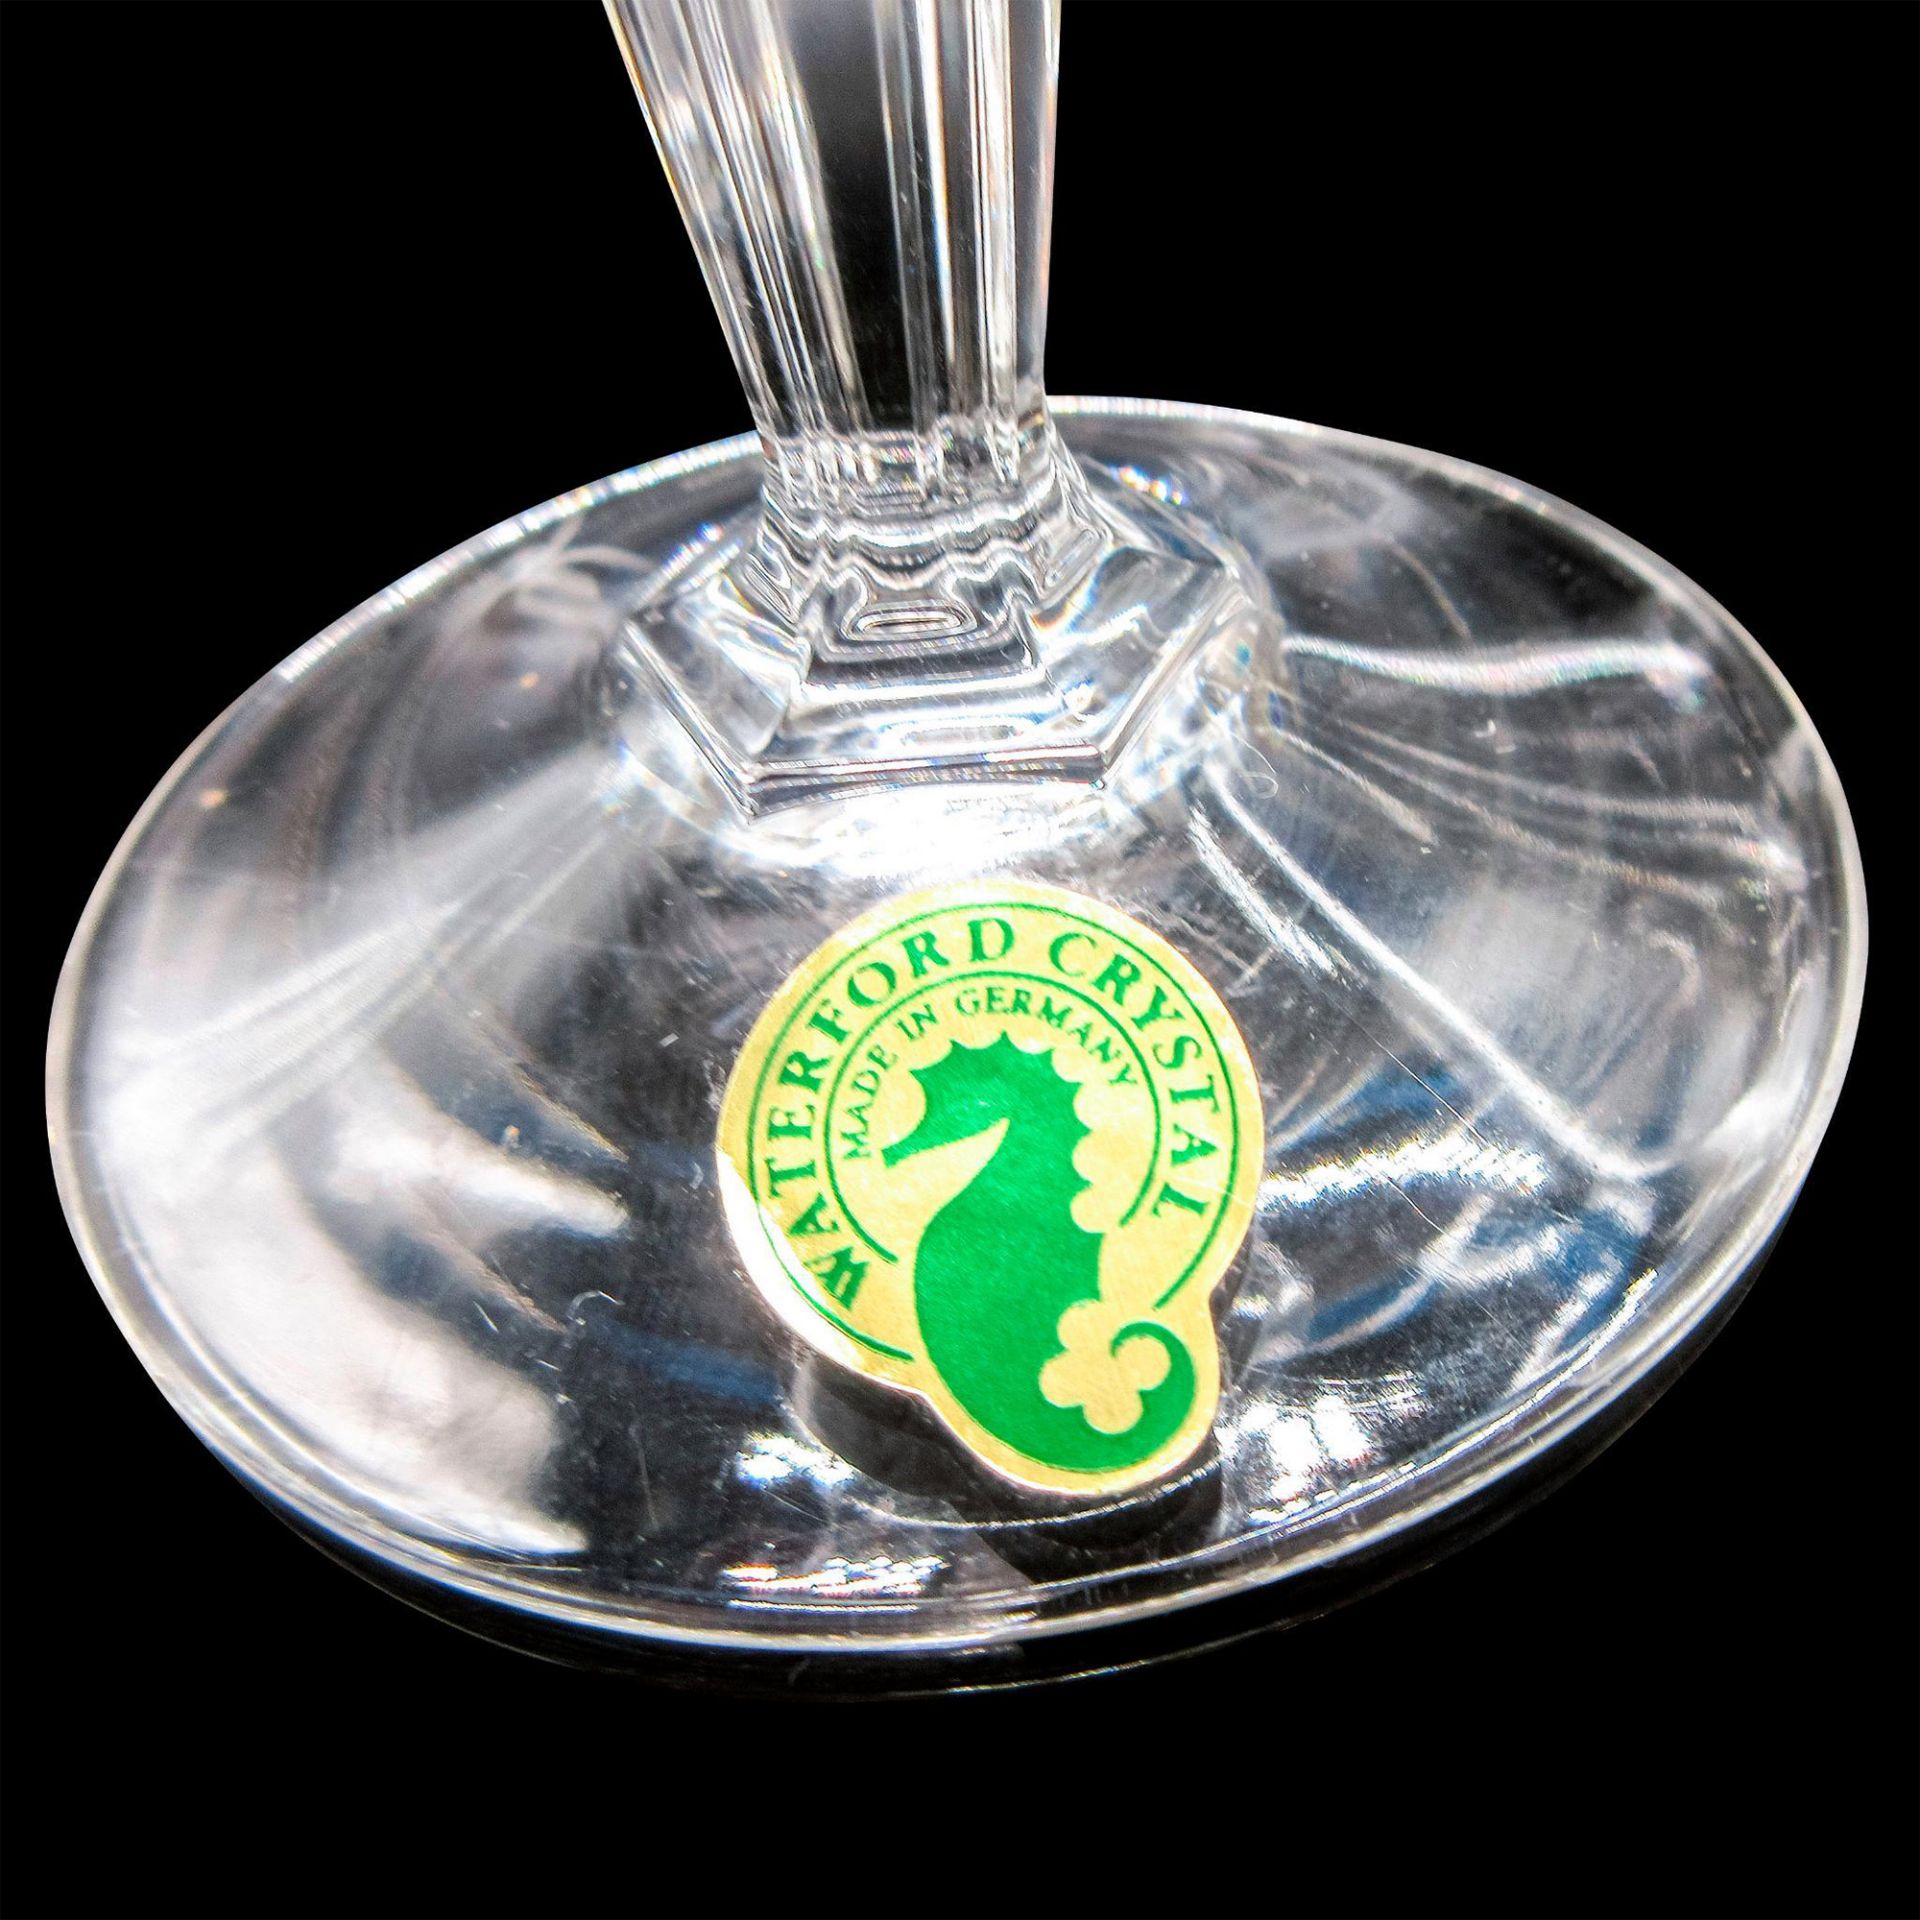 4pc Waterford Crystal Iced Tea Glasses, Metropolitan - Image 2 of 6